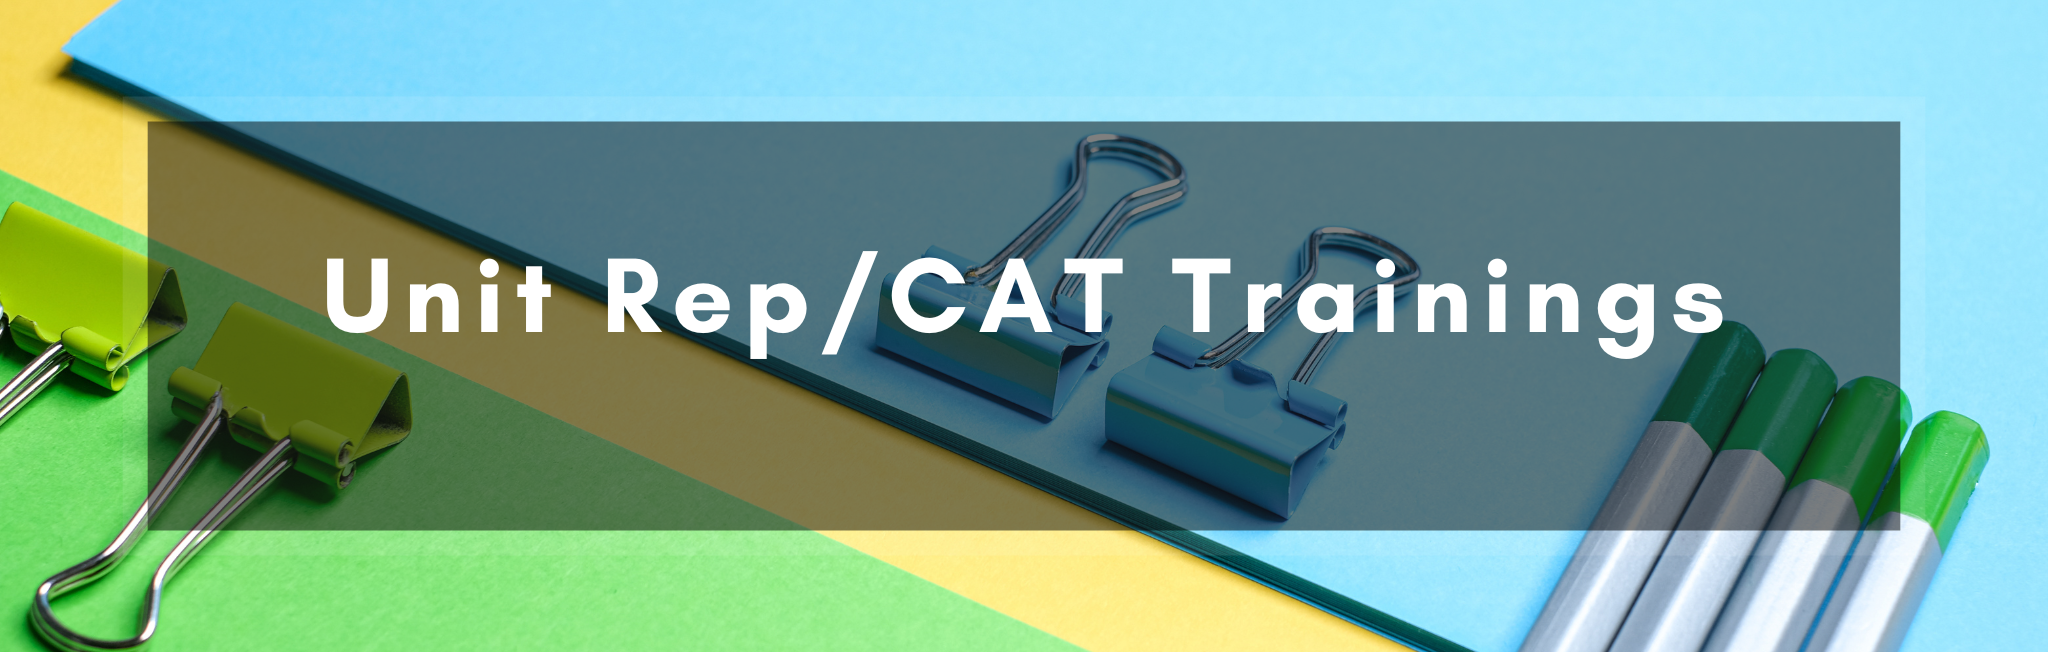 Unit Rep/CAT Trainings - April 15